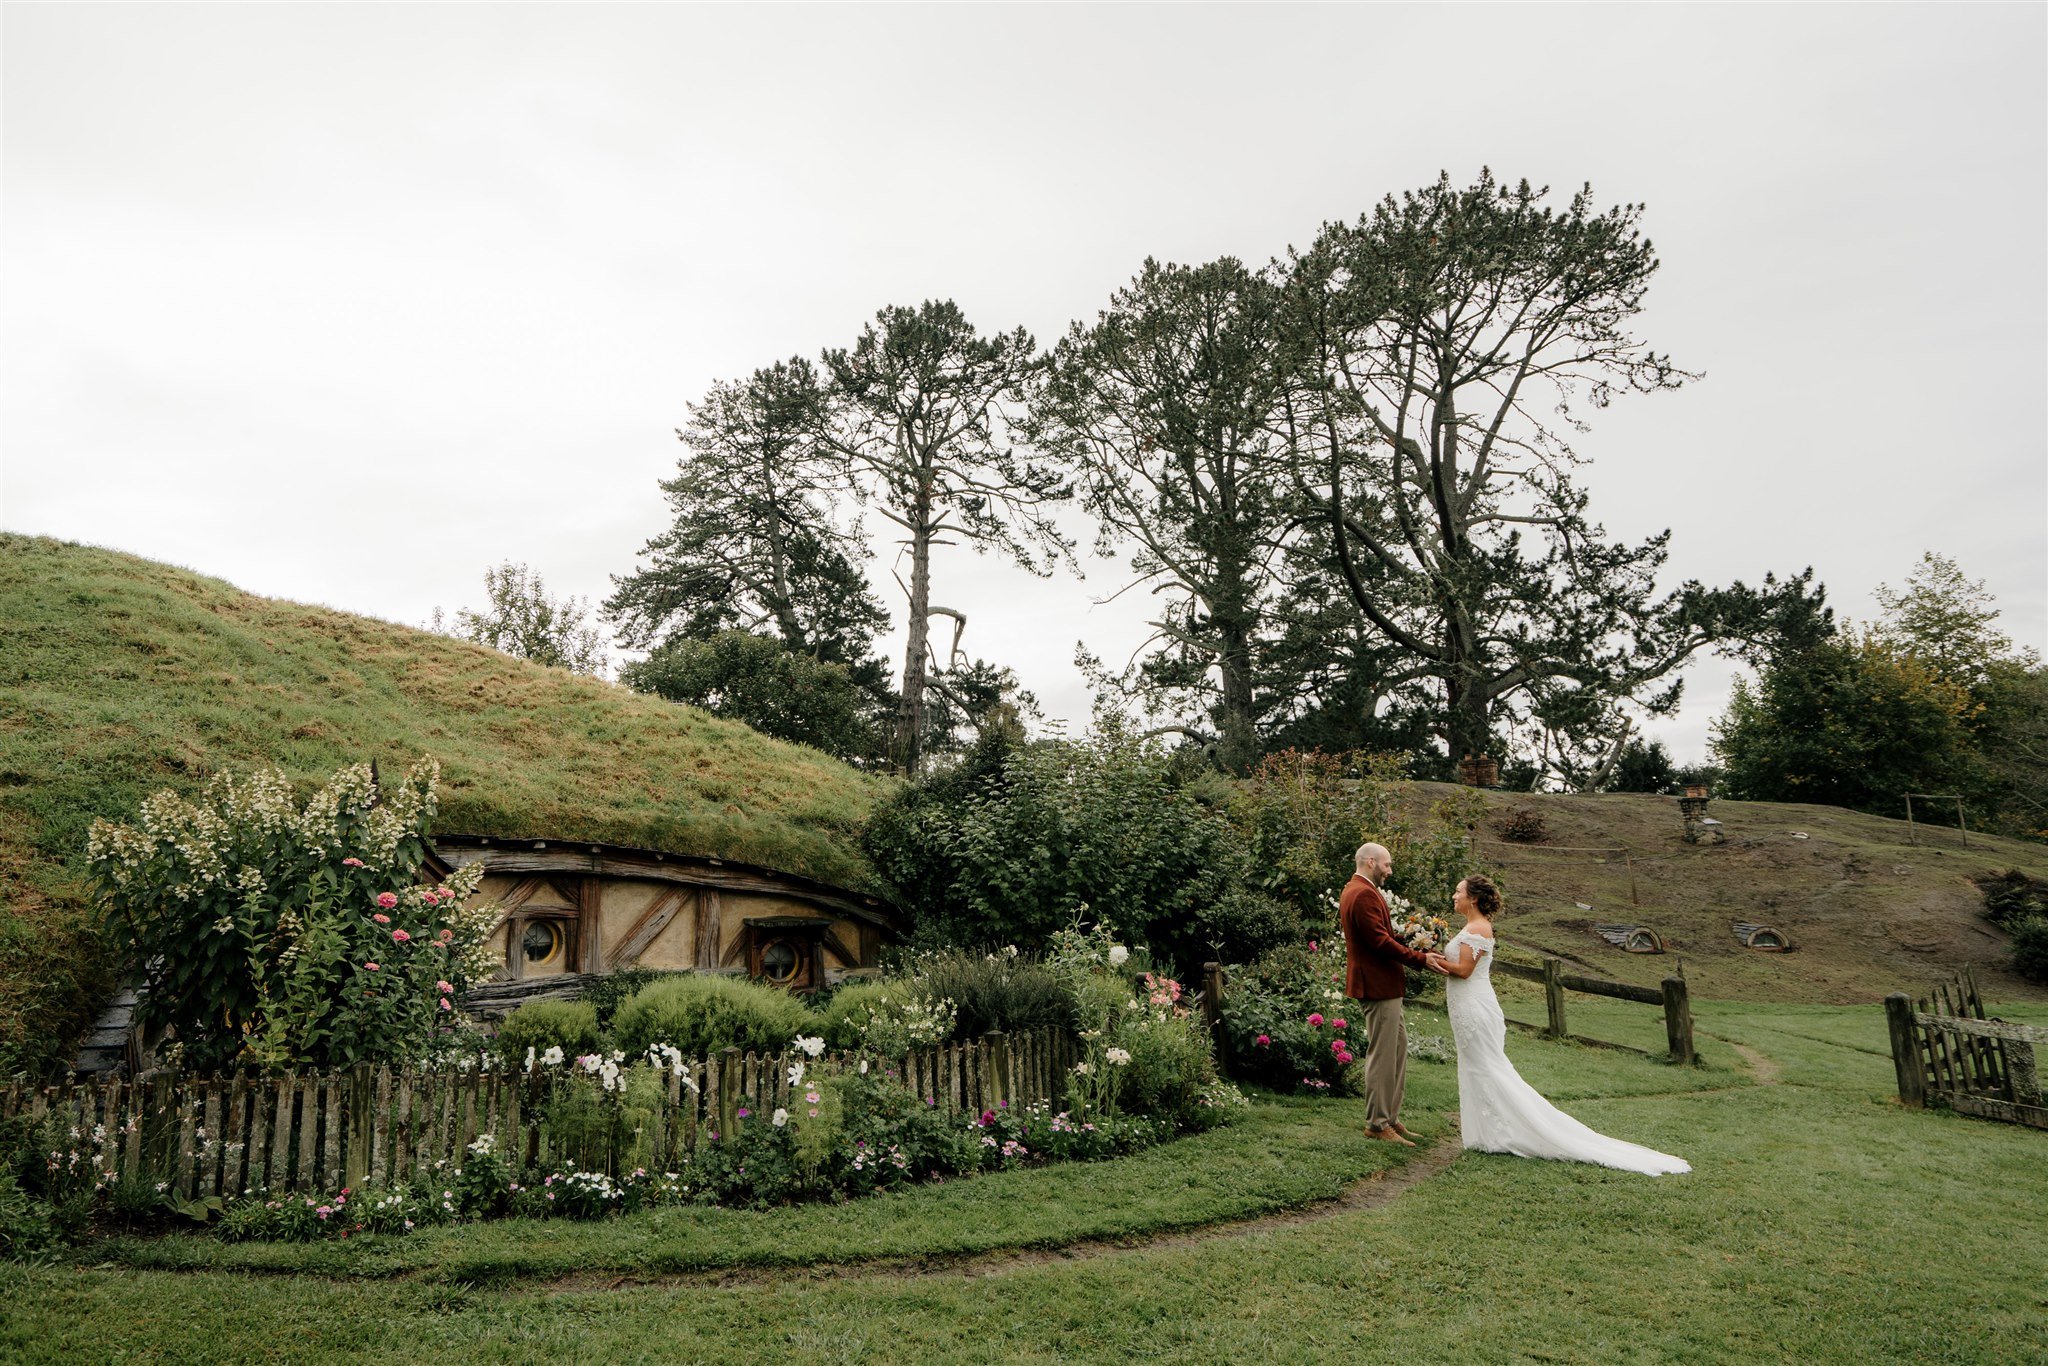 Matamata wedding venue | Hobbiton Tour | Auckland Wedding Photographer | Best Videographer | Top Videography | First Look Photos | The Green Dragon Inn | Dear White Productions